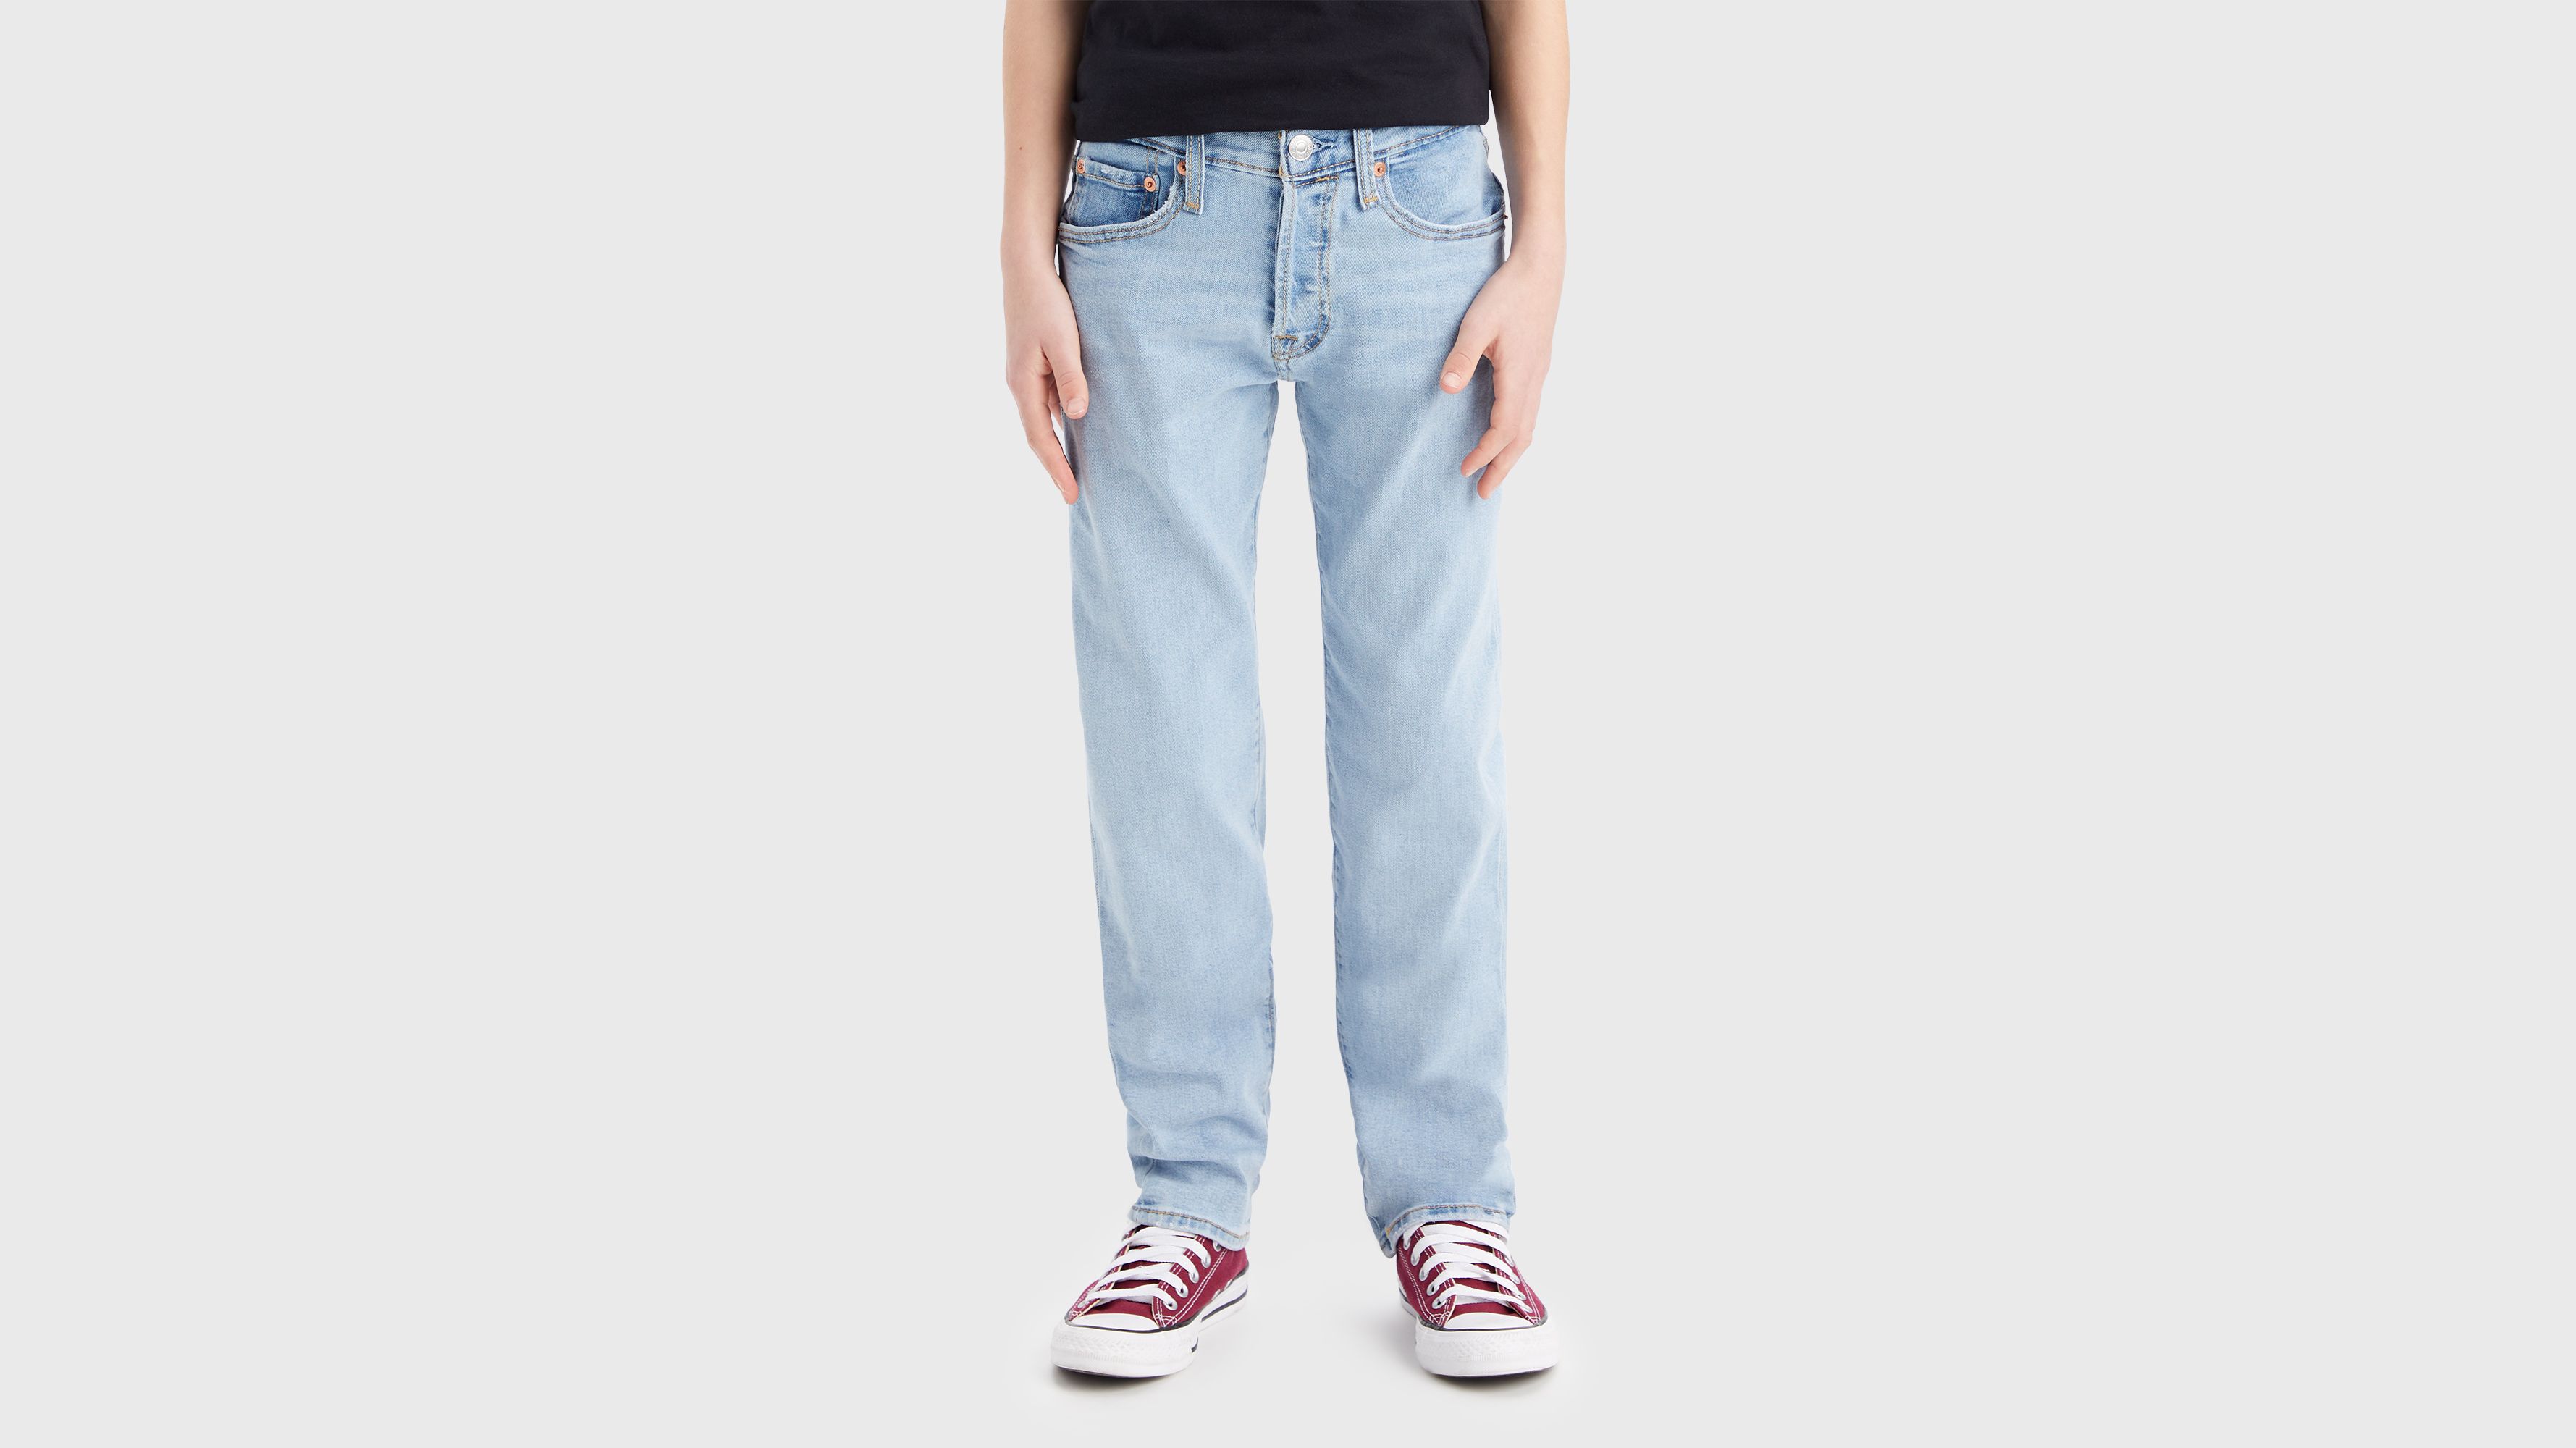 Teenager 501® Original Jeans